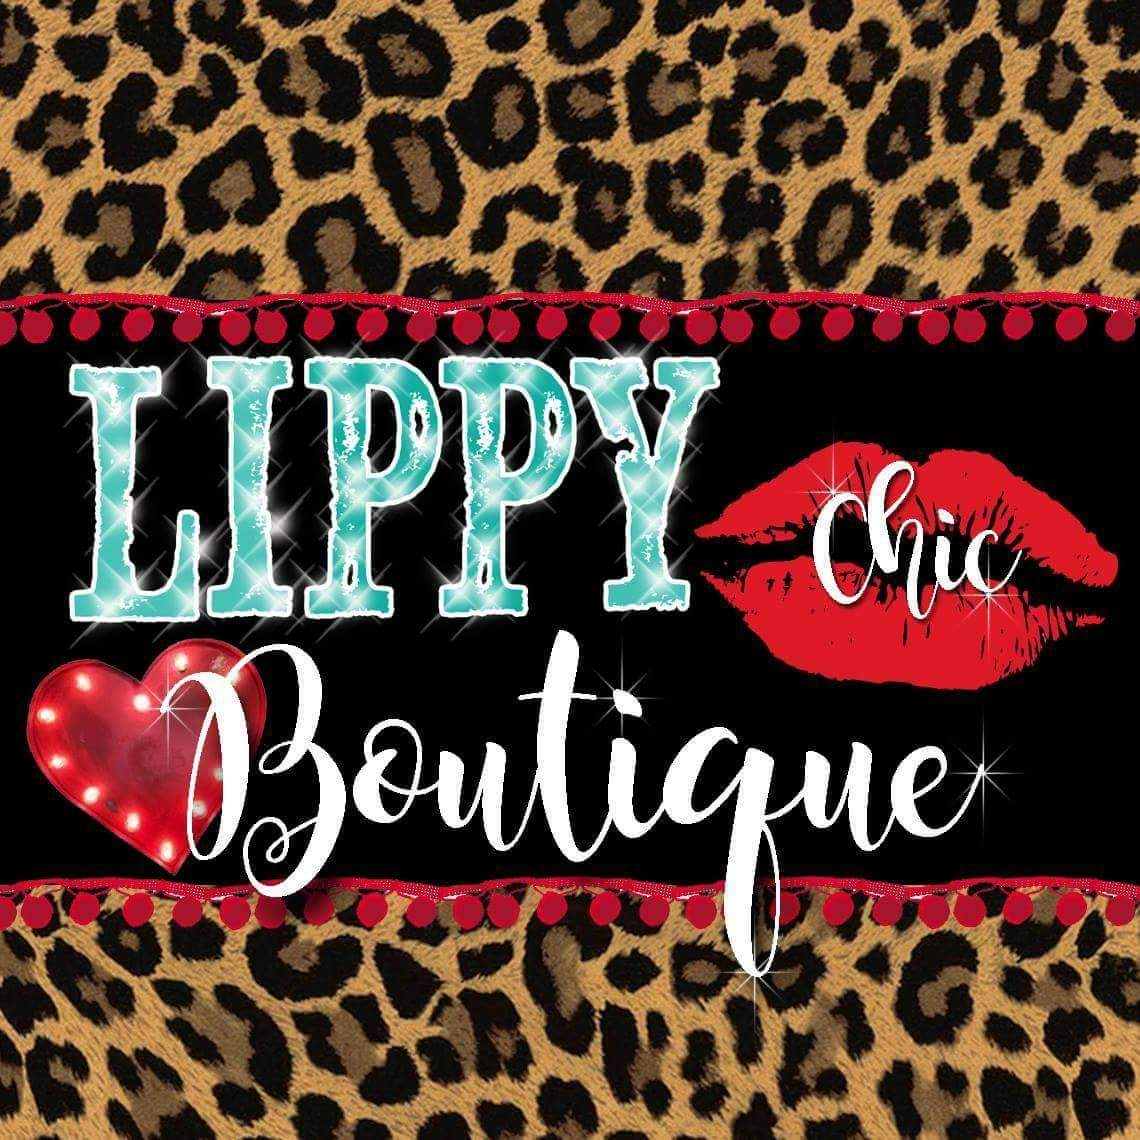 Lippy Chic Boutique